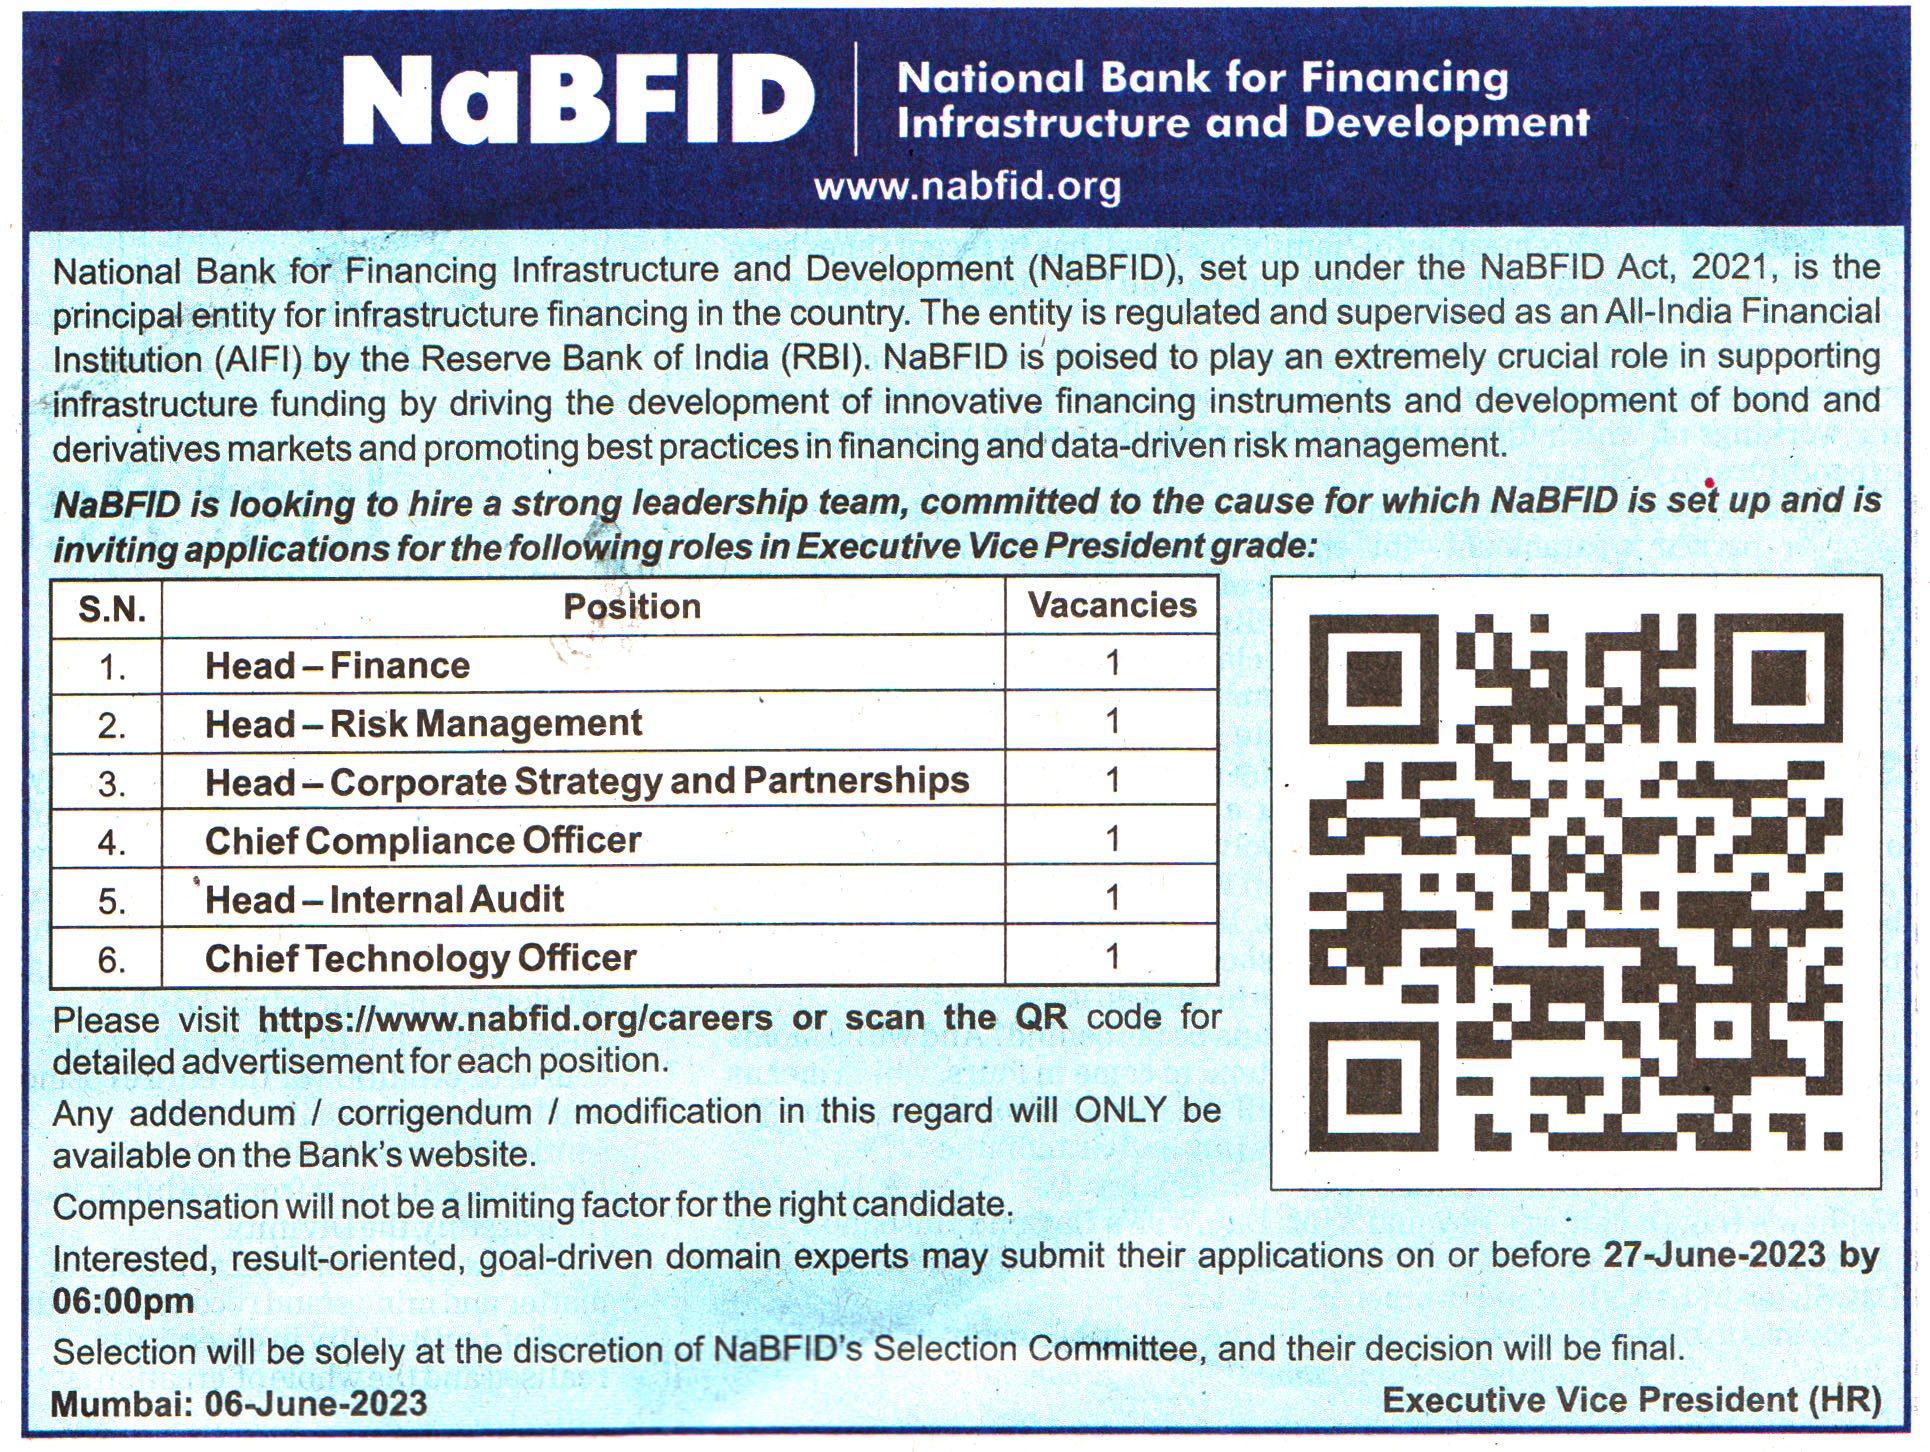 Bank Jobs National Bank for Financing Infrastructure and Development (NBFID) Recruitment